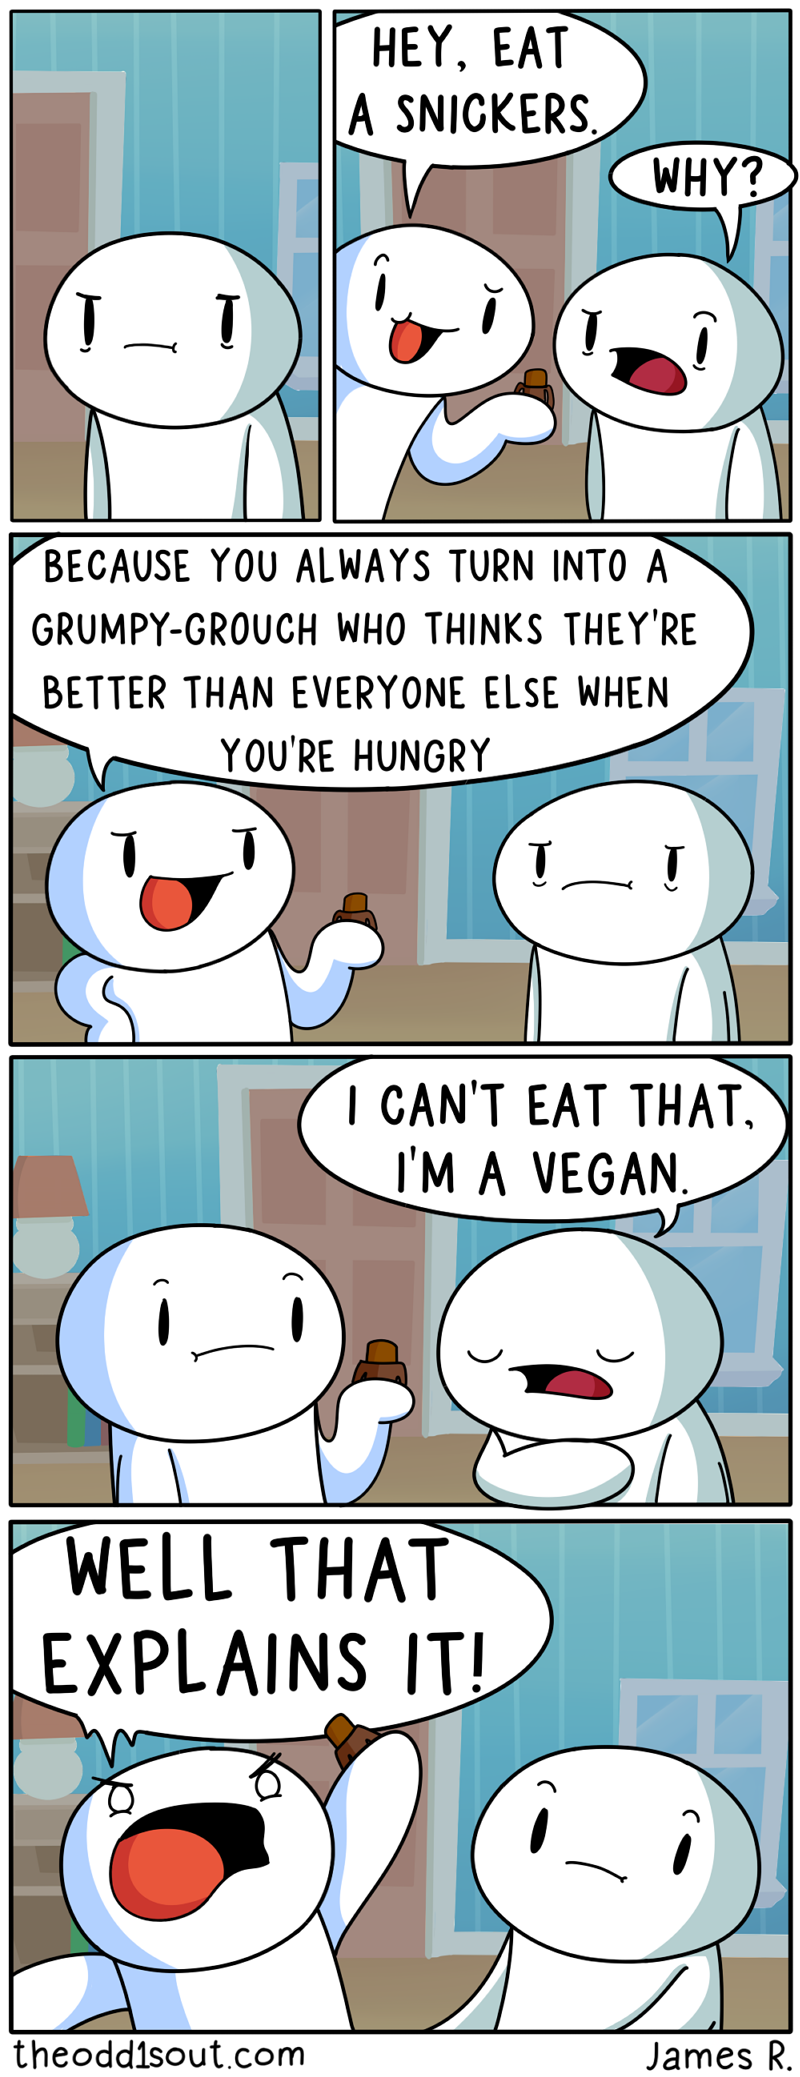 Always those pesky vegans